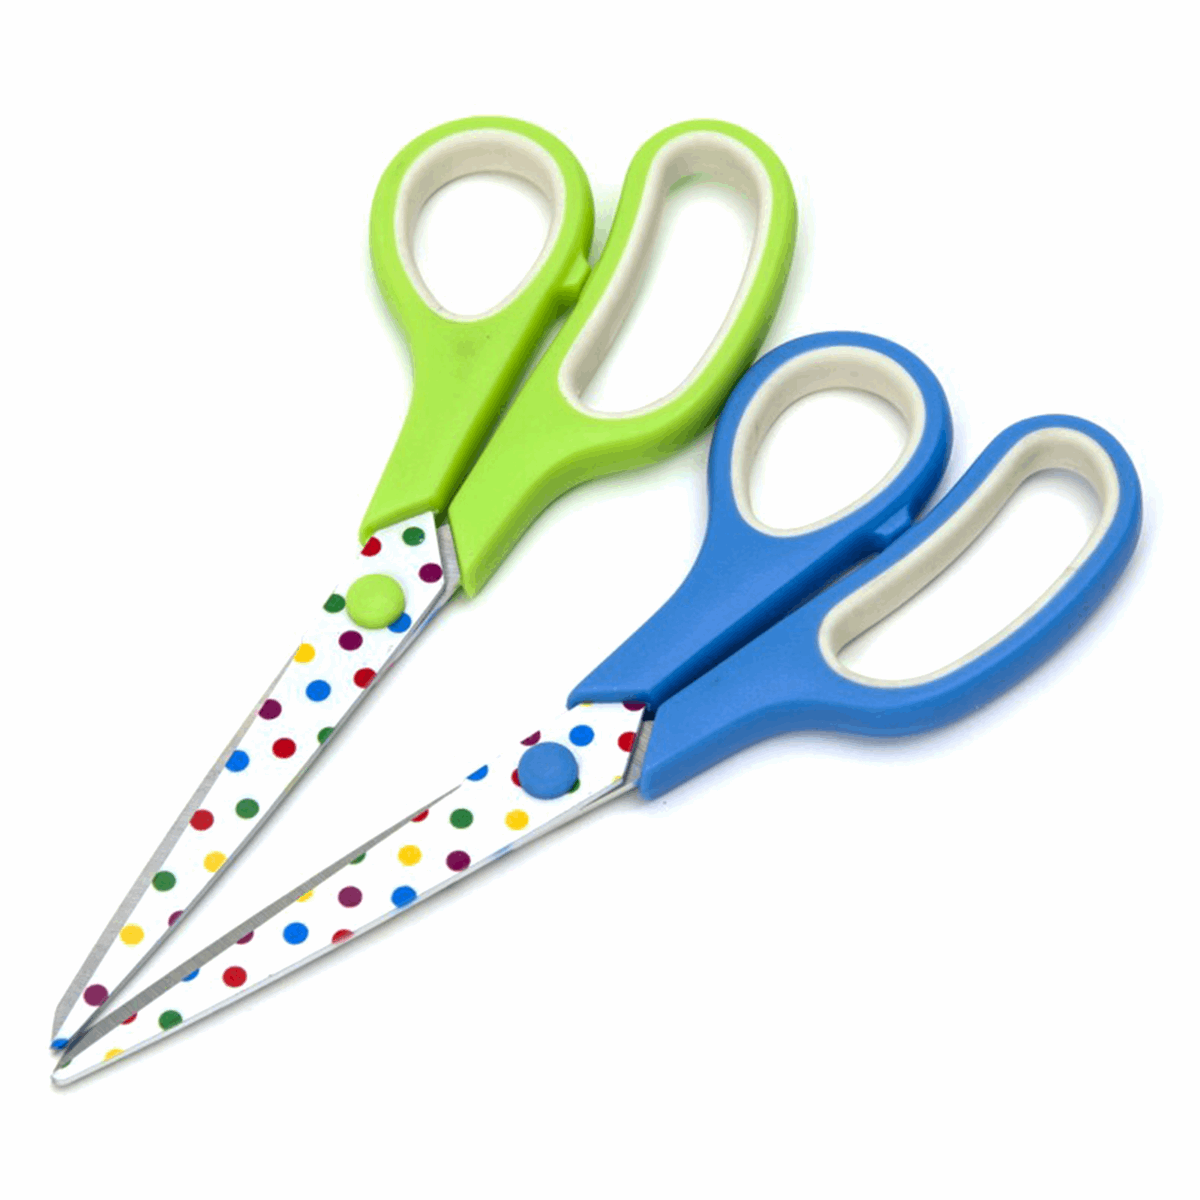 General Purpose Hobby Scissors